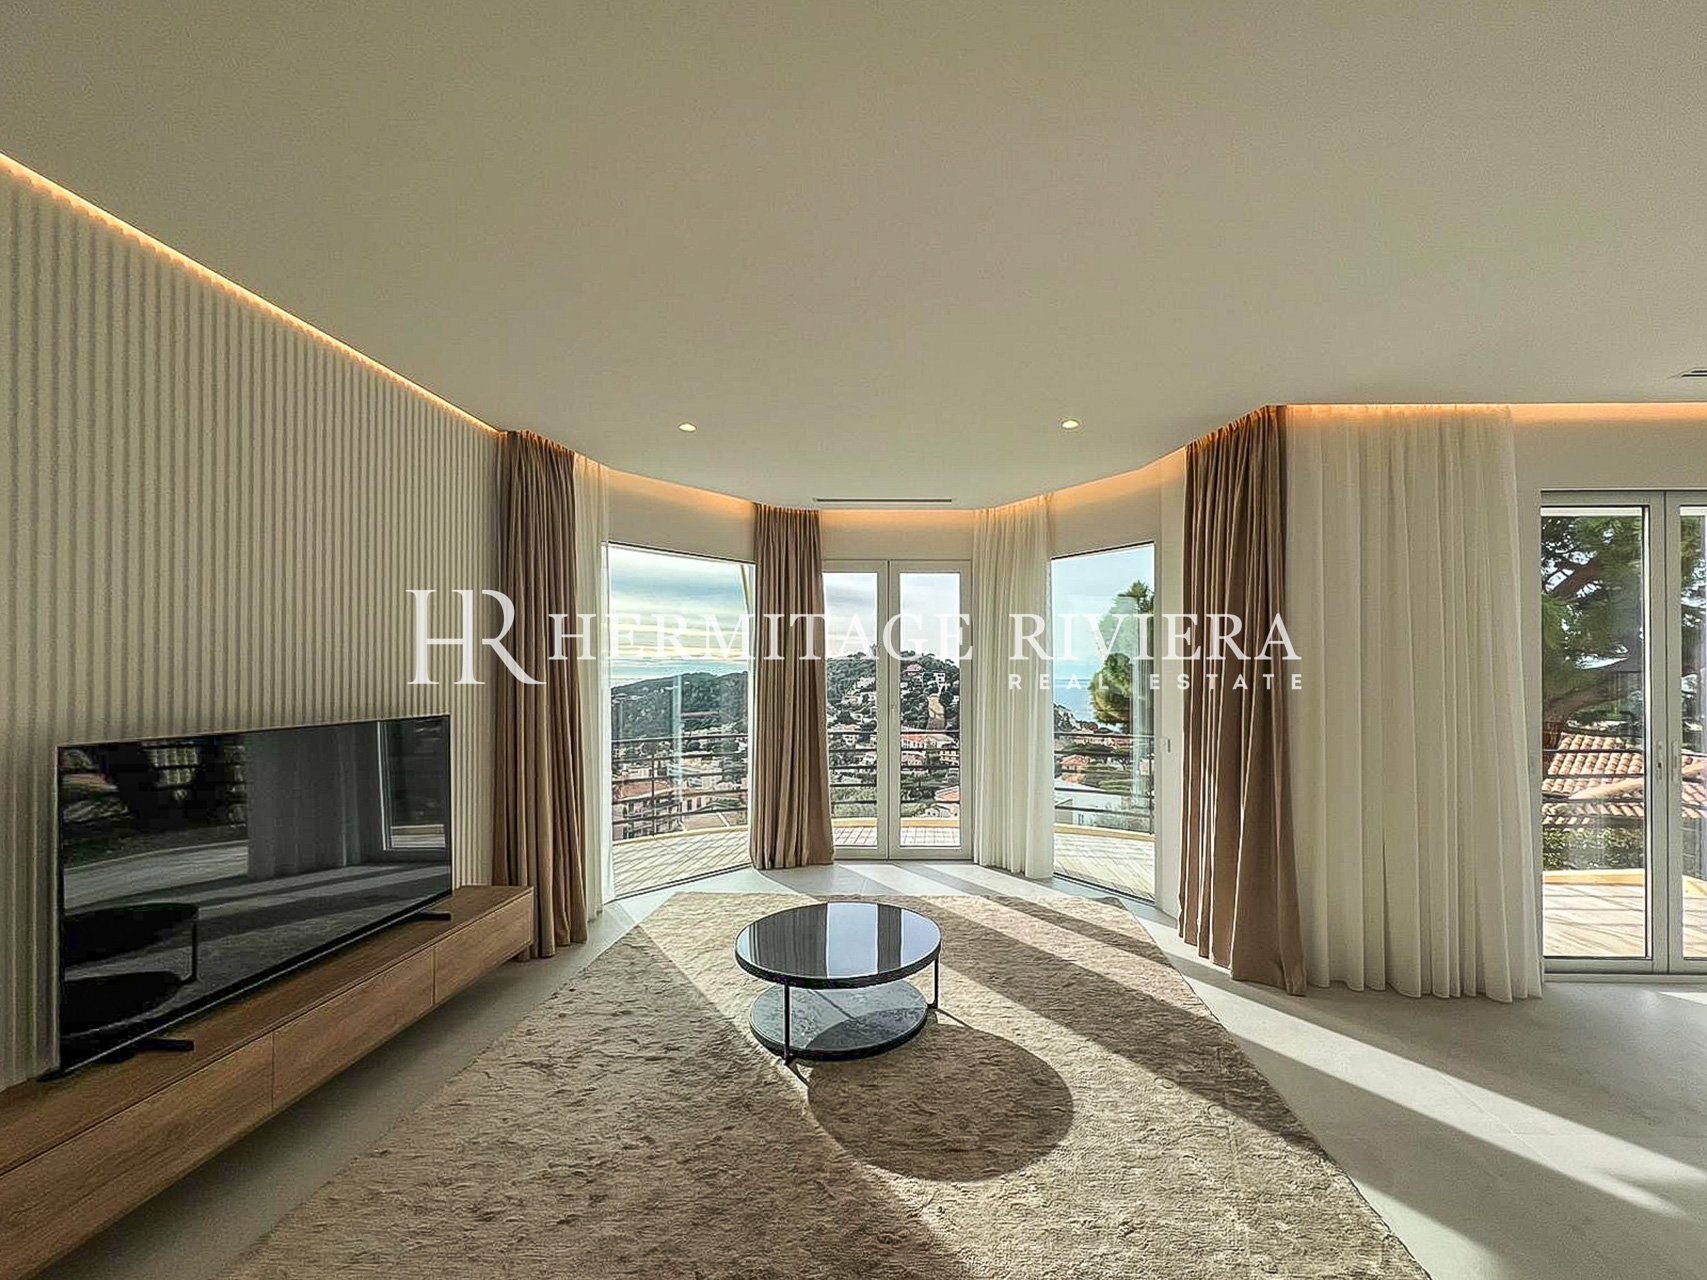 Splendid renovated apartment with panoramic sea view (image 4)